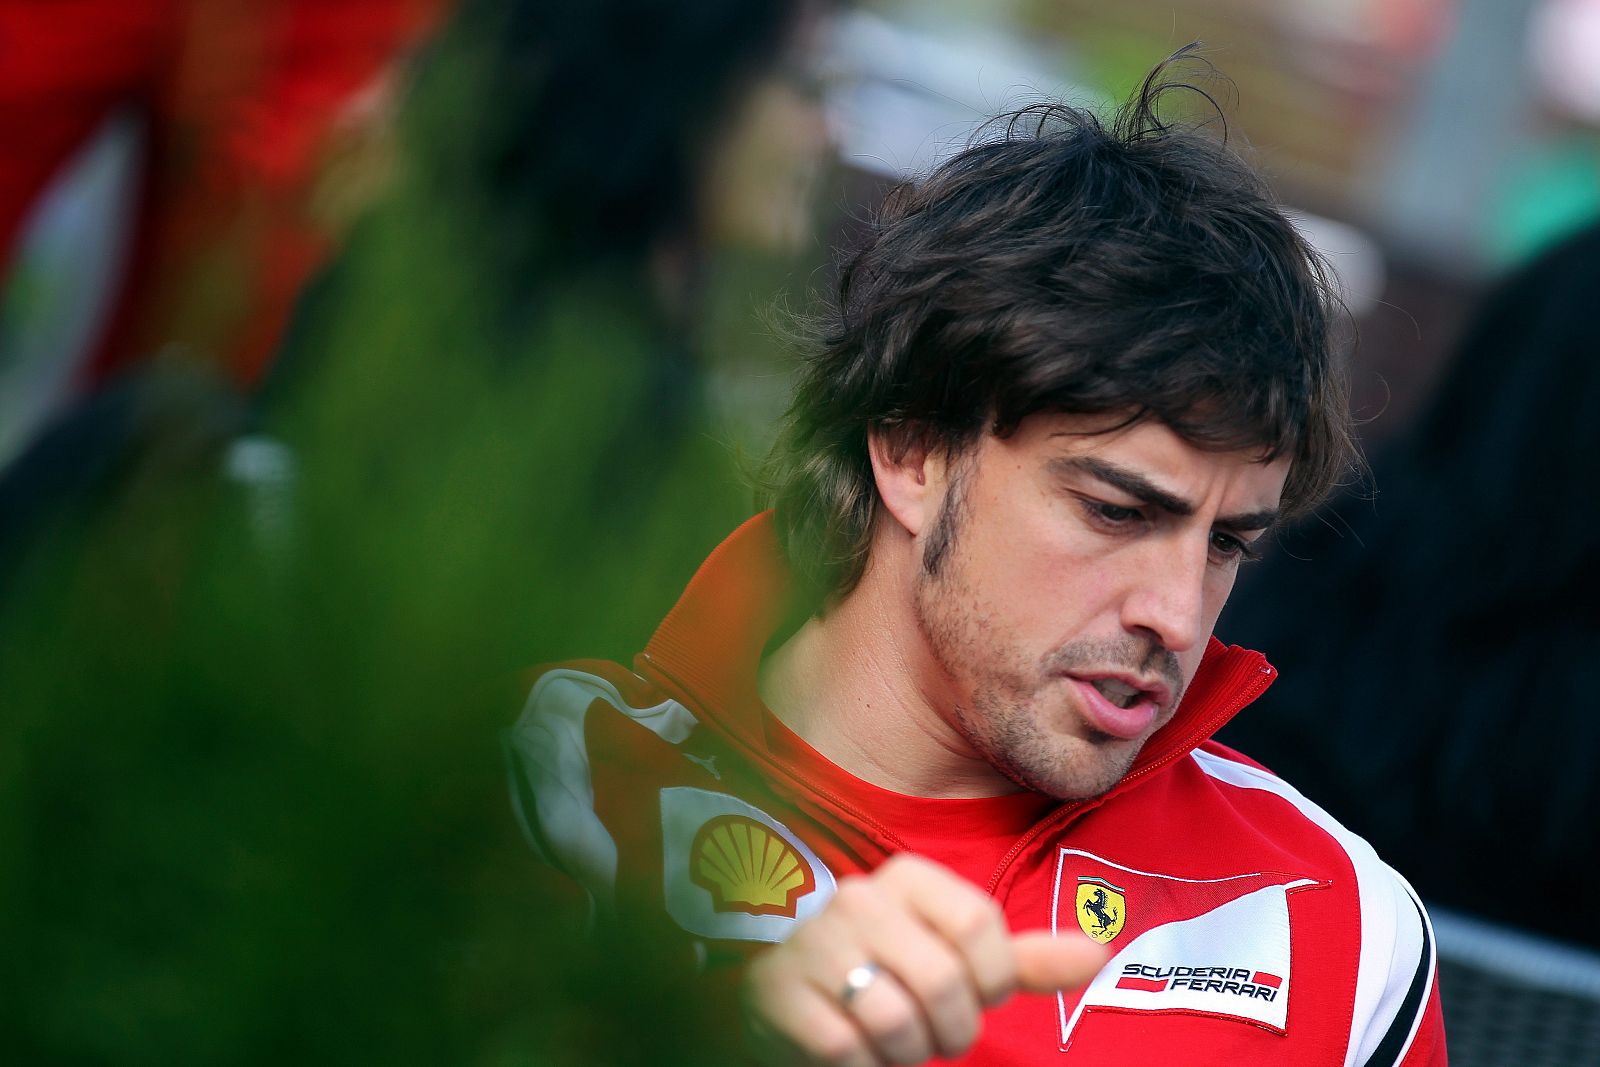 El piloto español de Ferrari, Fernando Alonso, en el Gran Premio de Australia.